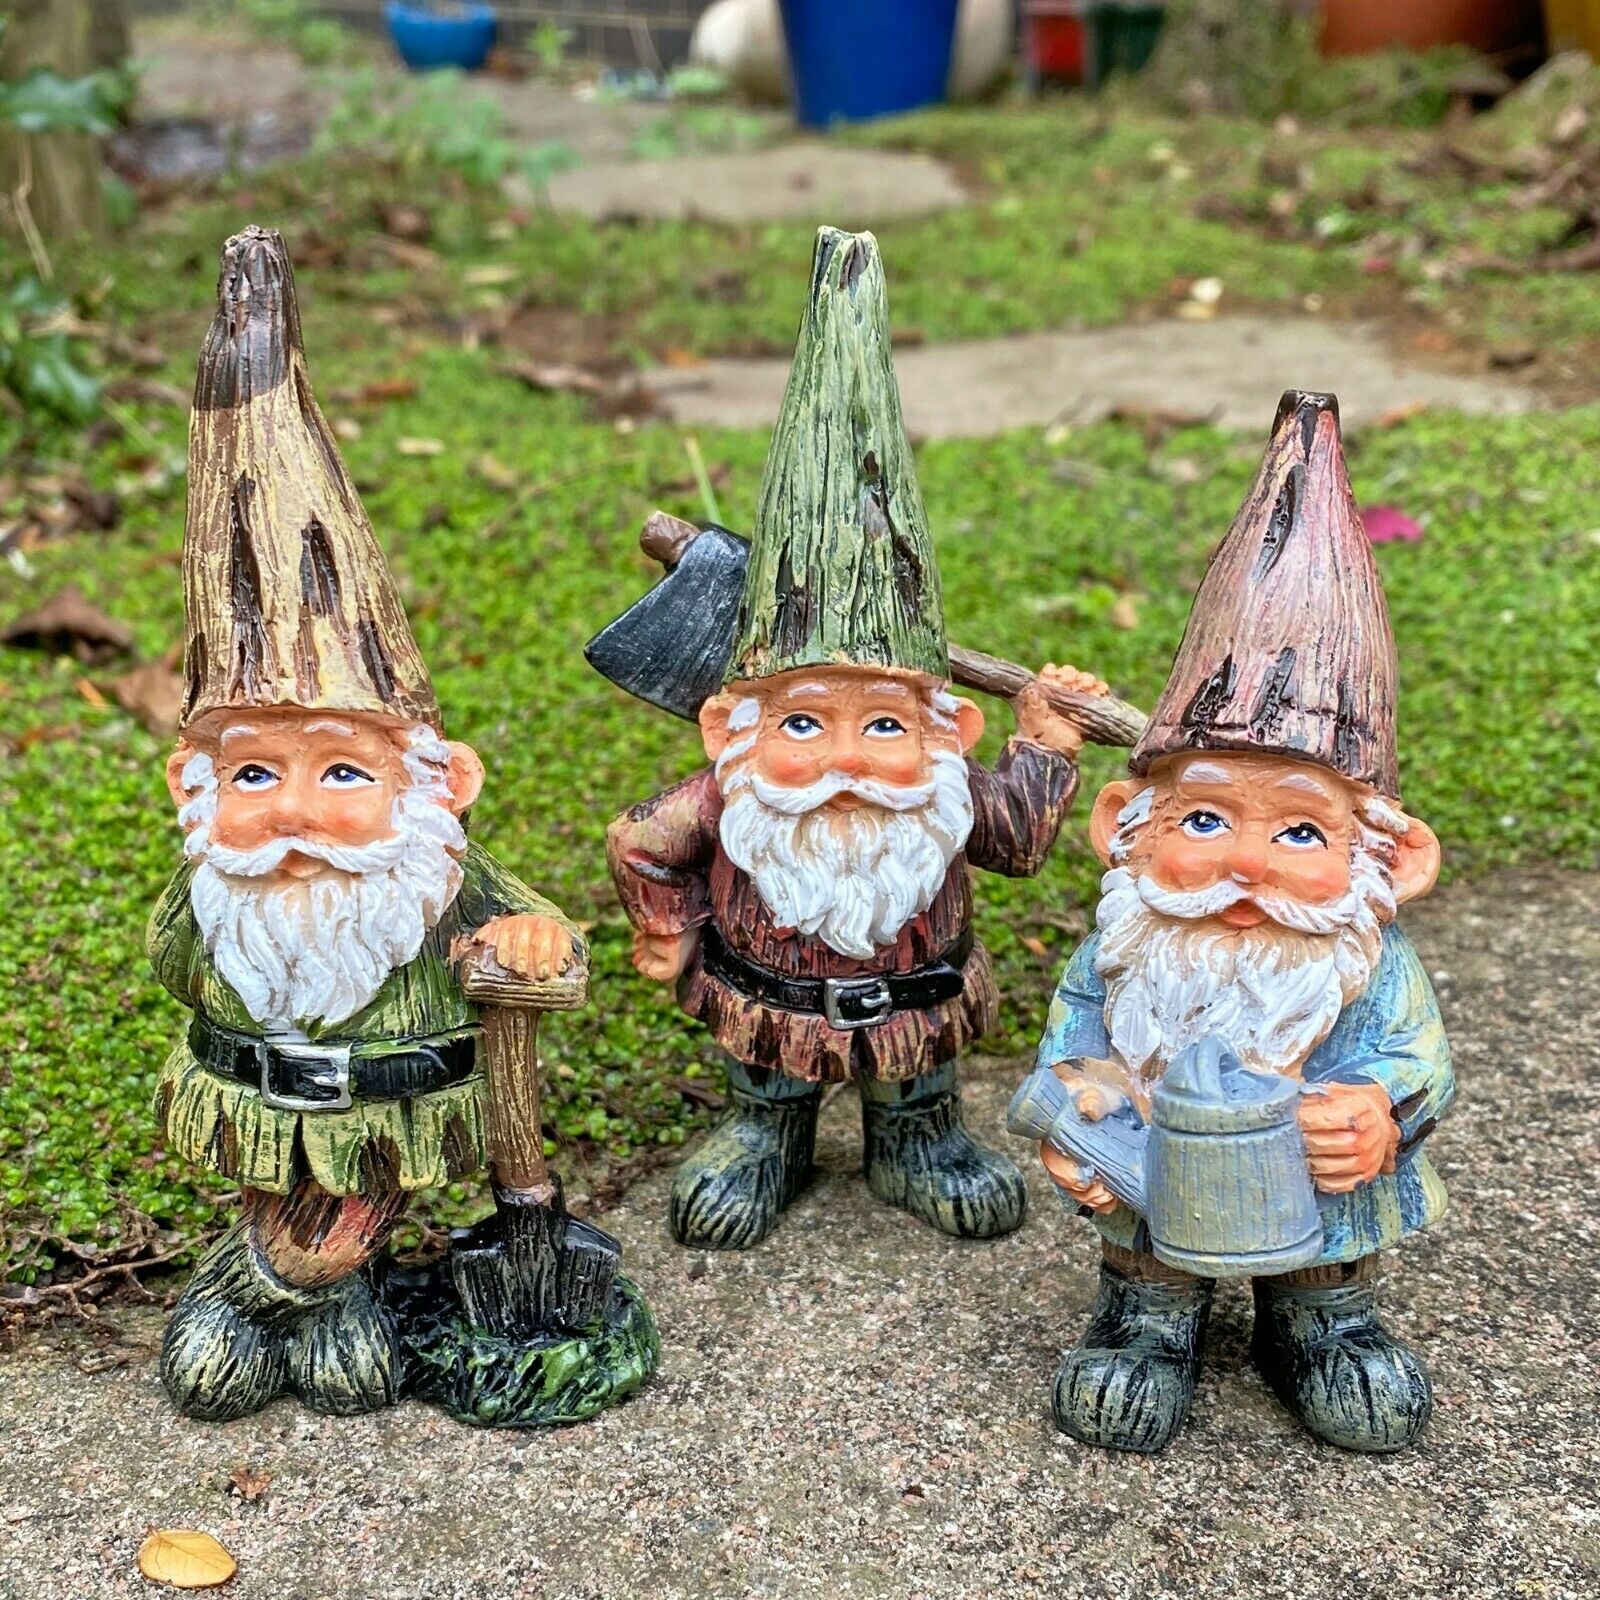 Garden Gnomes Funny Outdoor Gnome Statues Crafts Garden Decor Funny Lawn  Yard | eBay